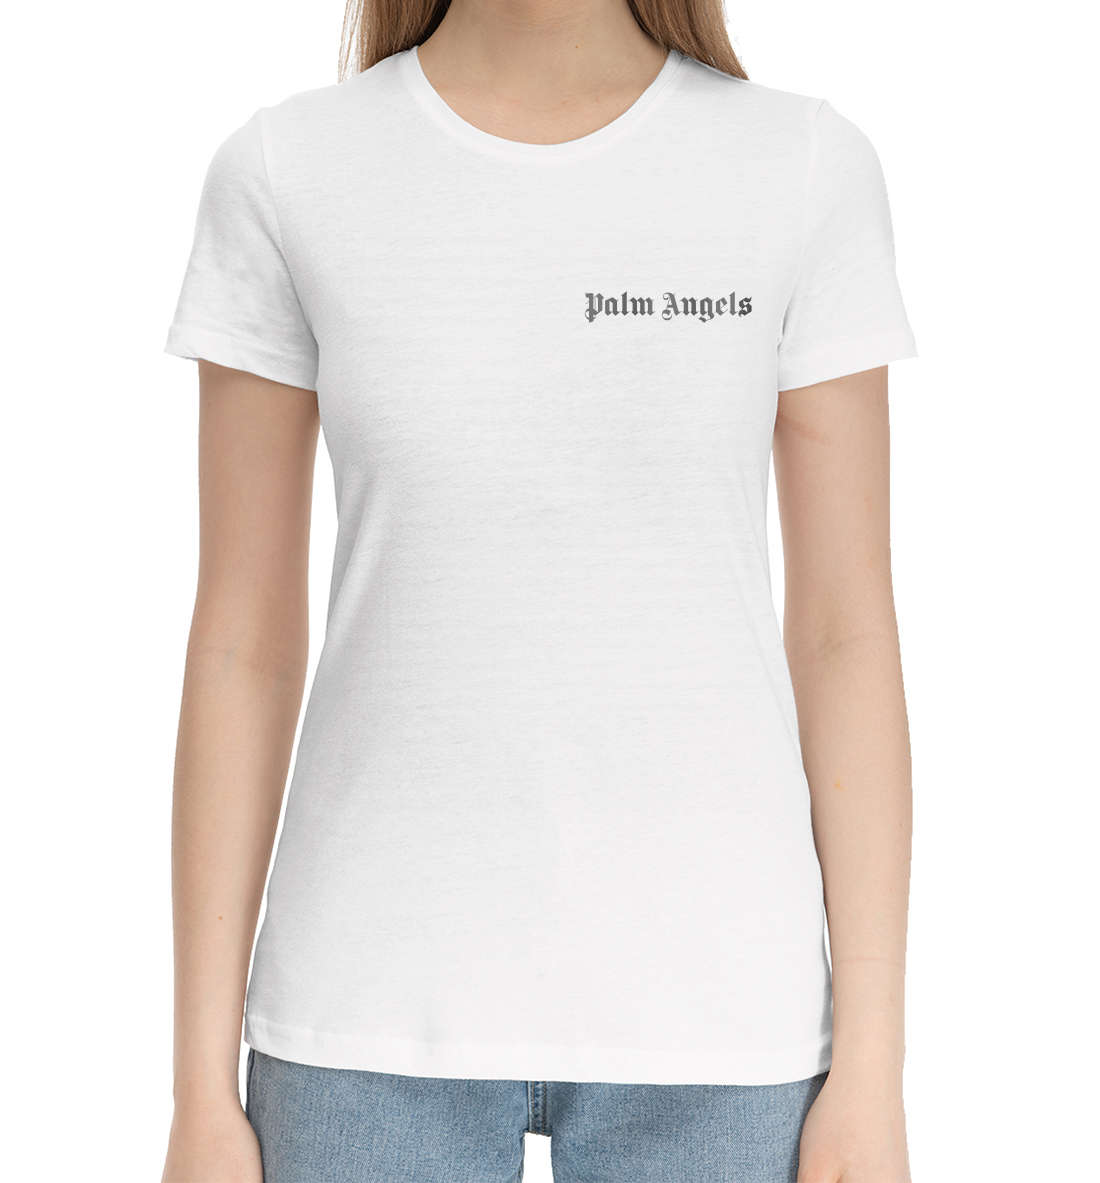 Женская Хлопковая футболка с надписью Palm Angels, артикул PAG-242163-hfu-1mp